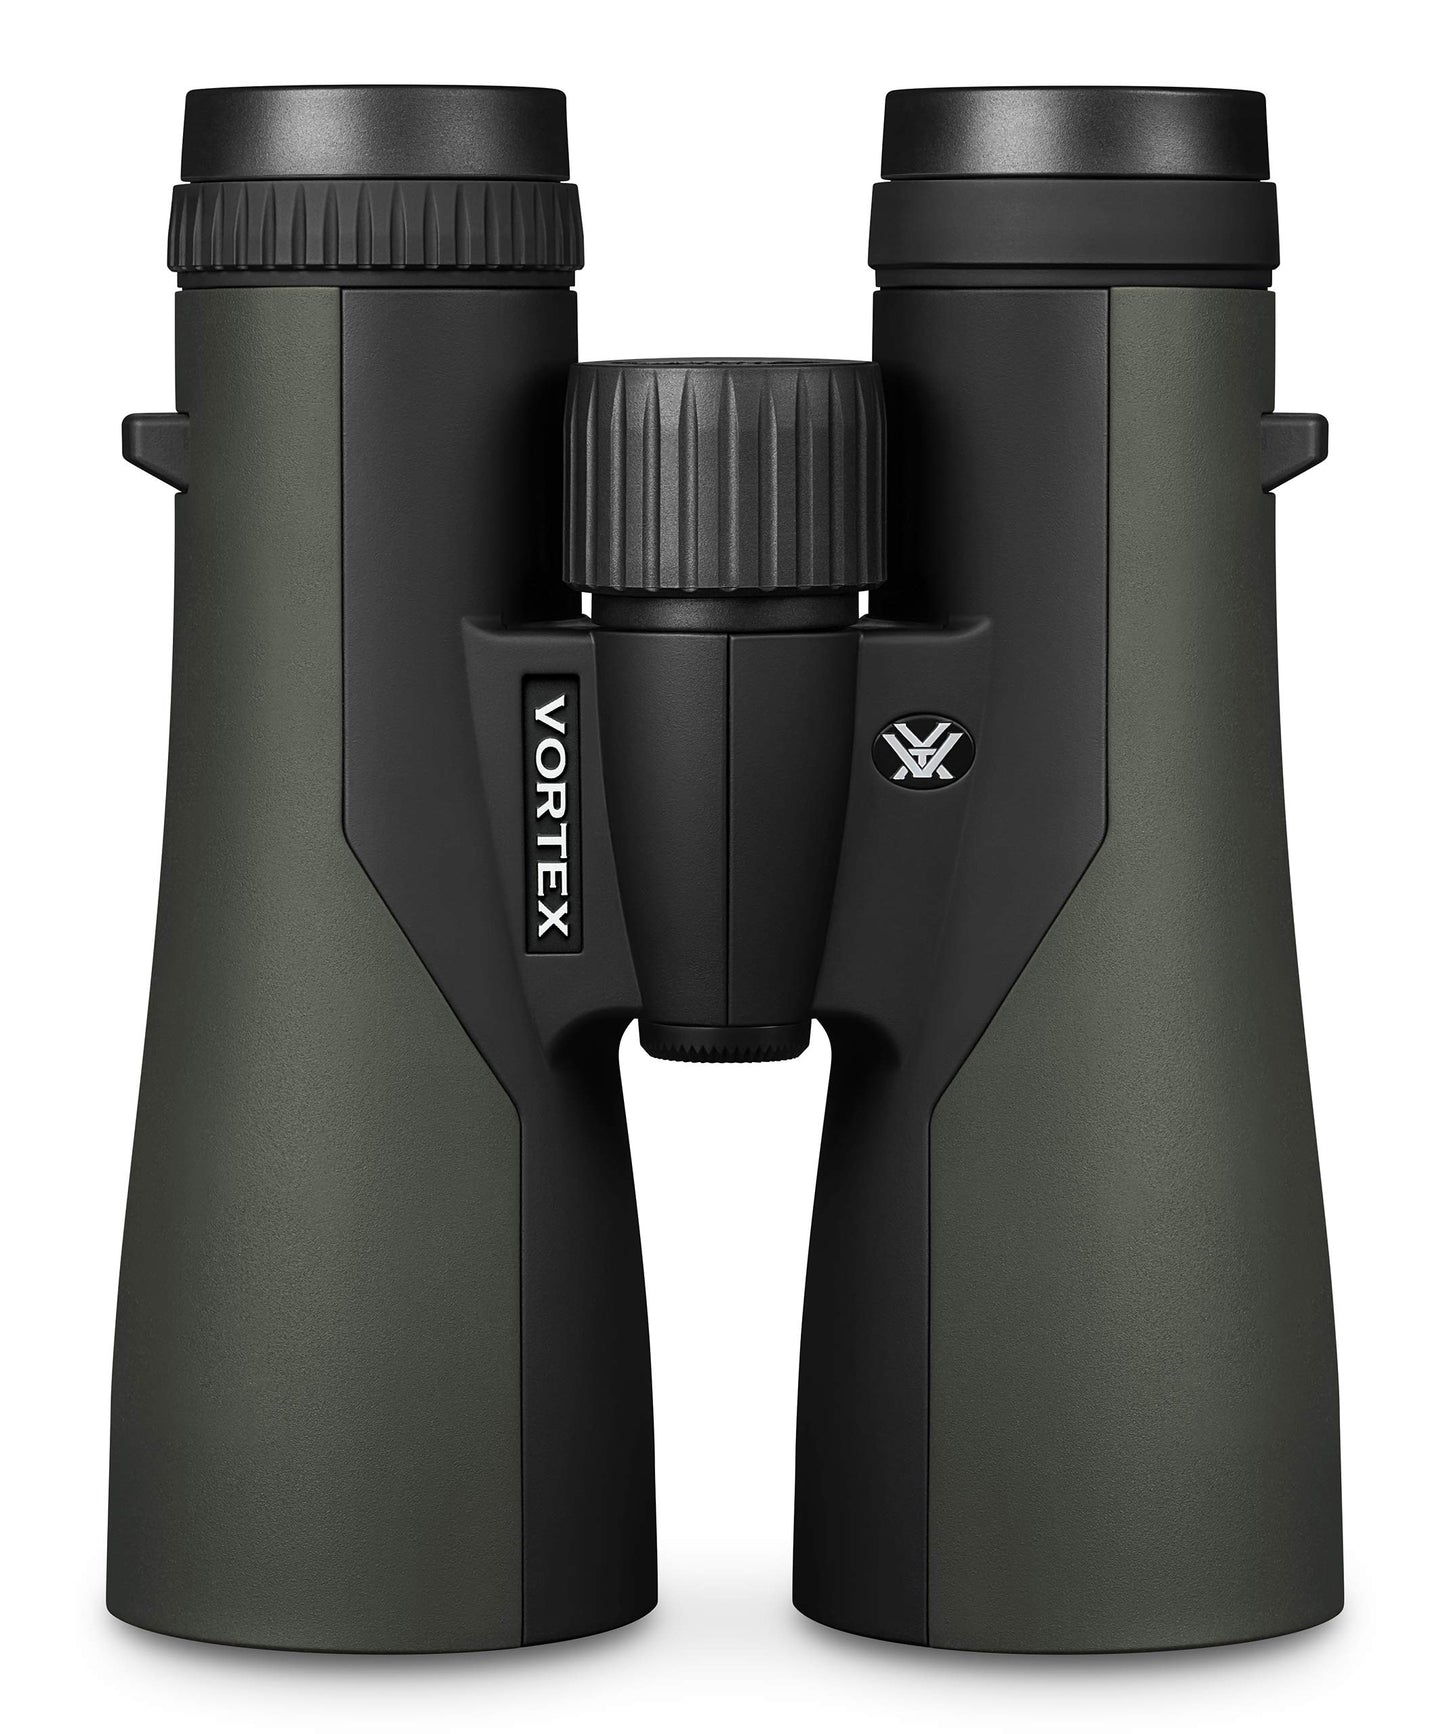 Vortex Optics Crossfire HD 12x50 Binoculars - CF-4314